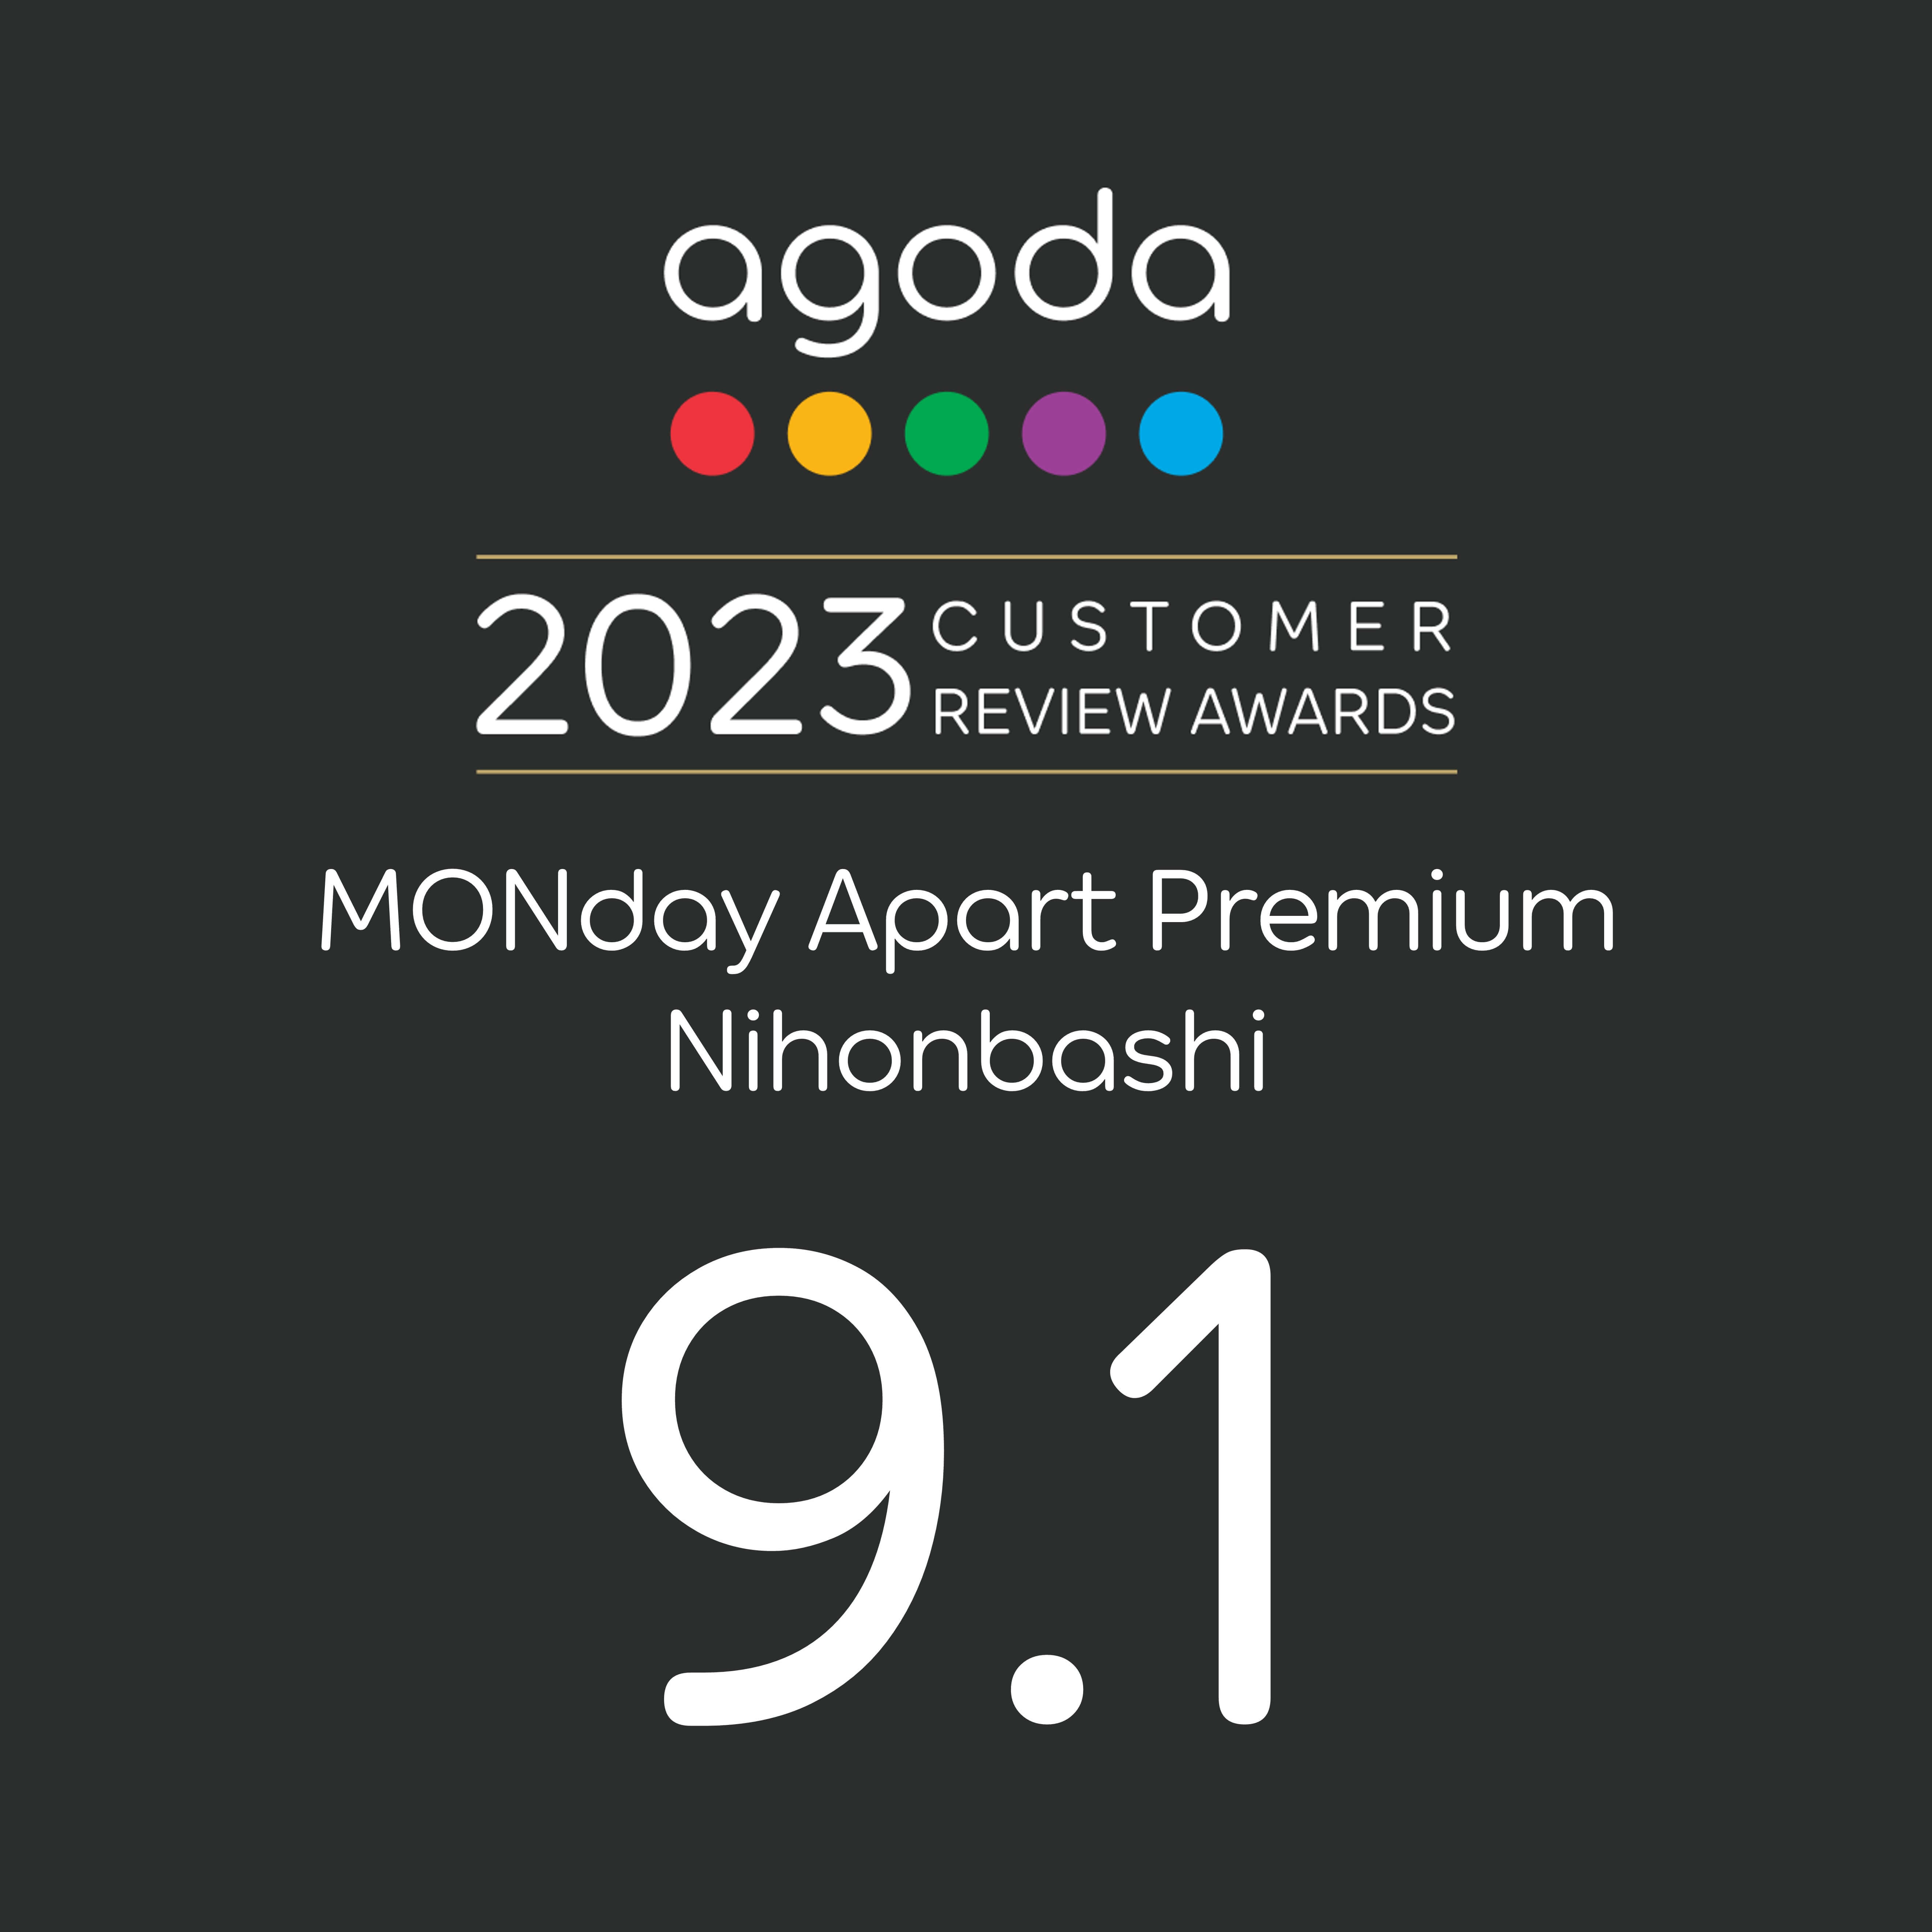 agoda 2023 CUSTOMER REVIEW AWARD MONday Apart Premium NIHONBASHI